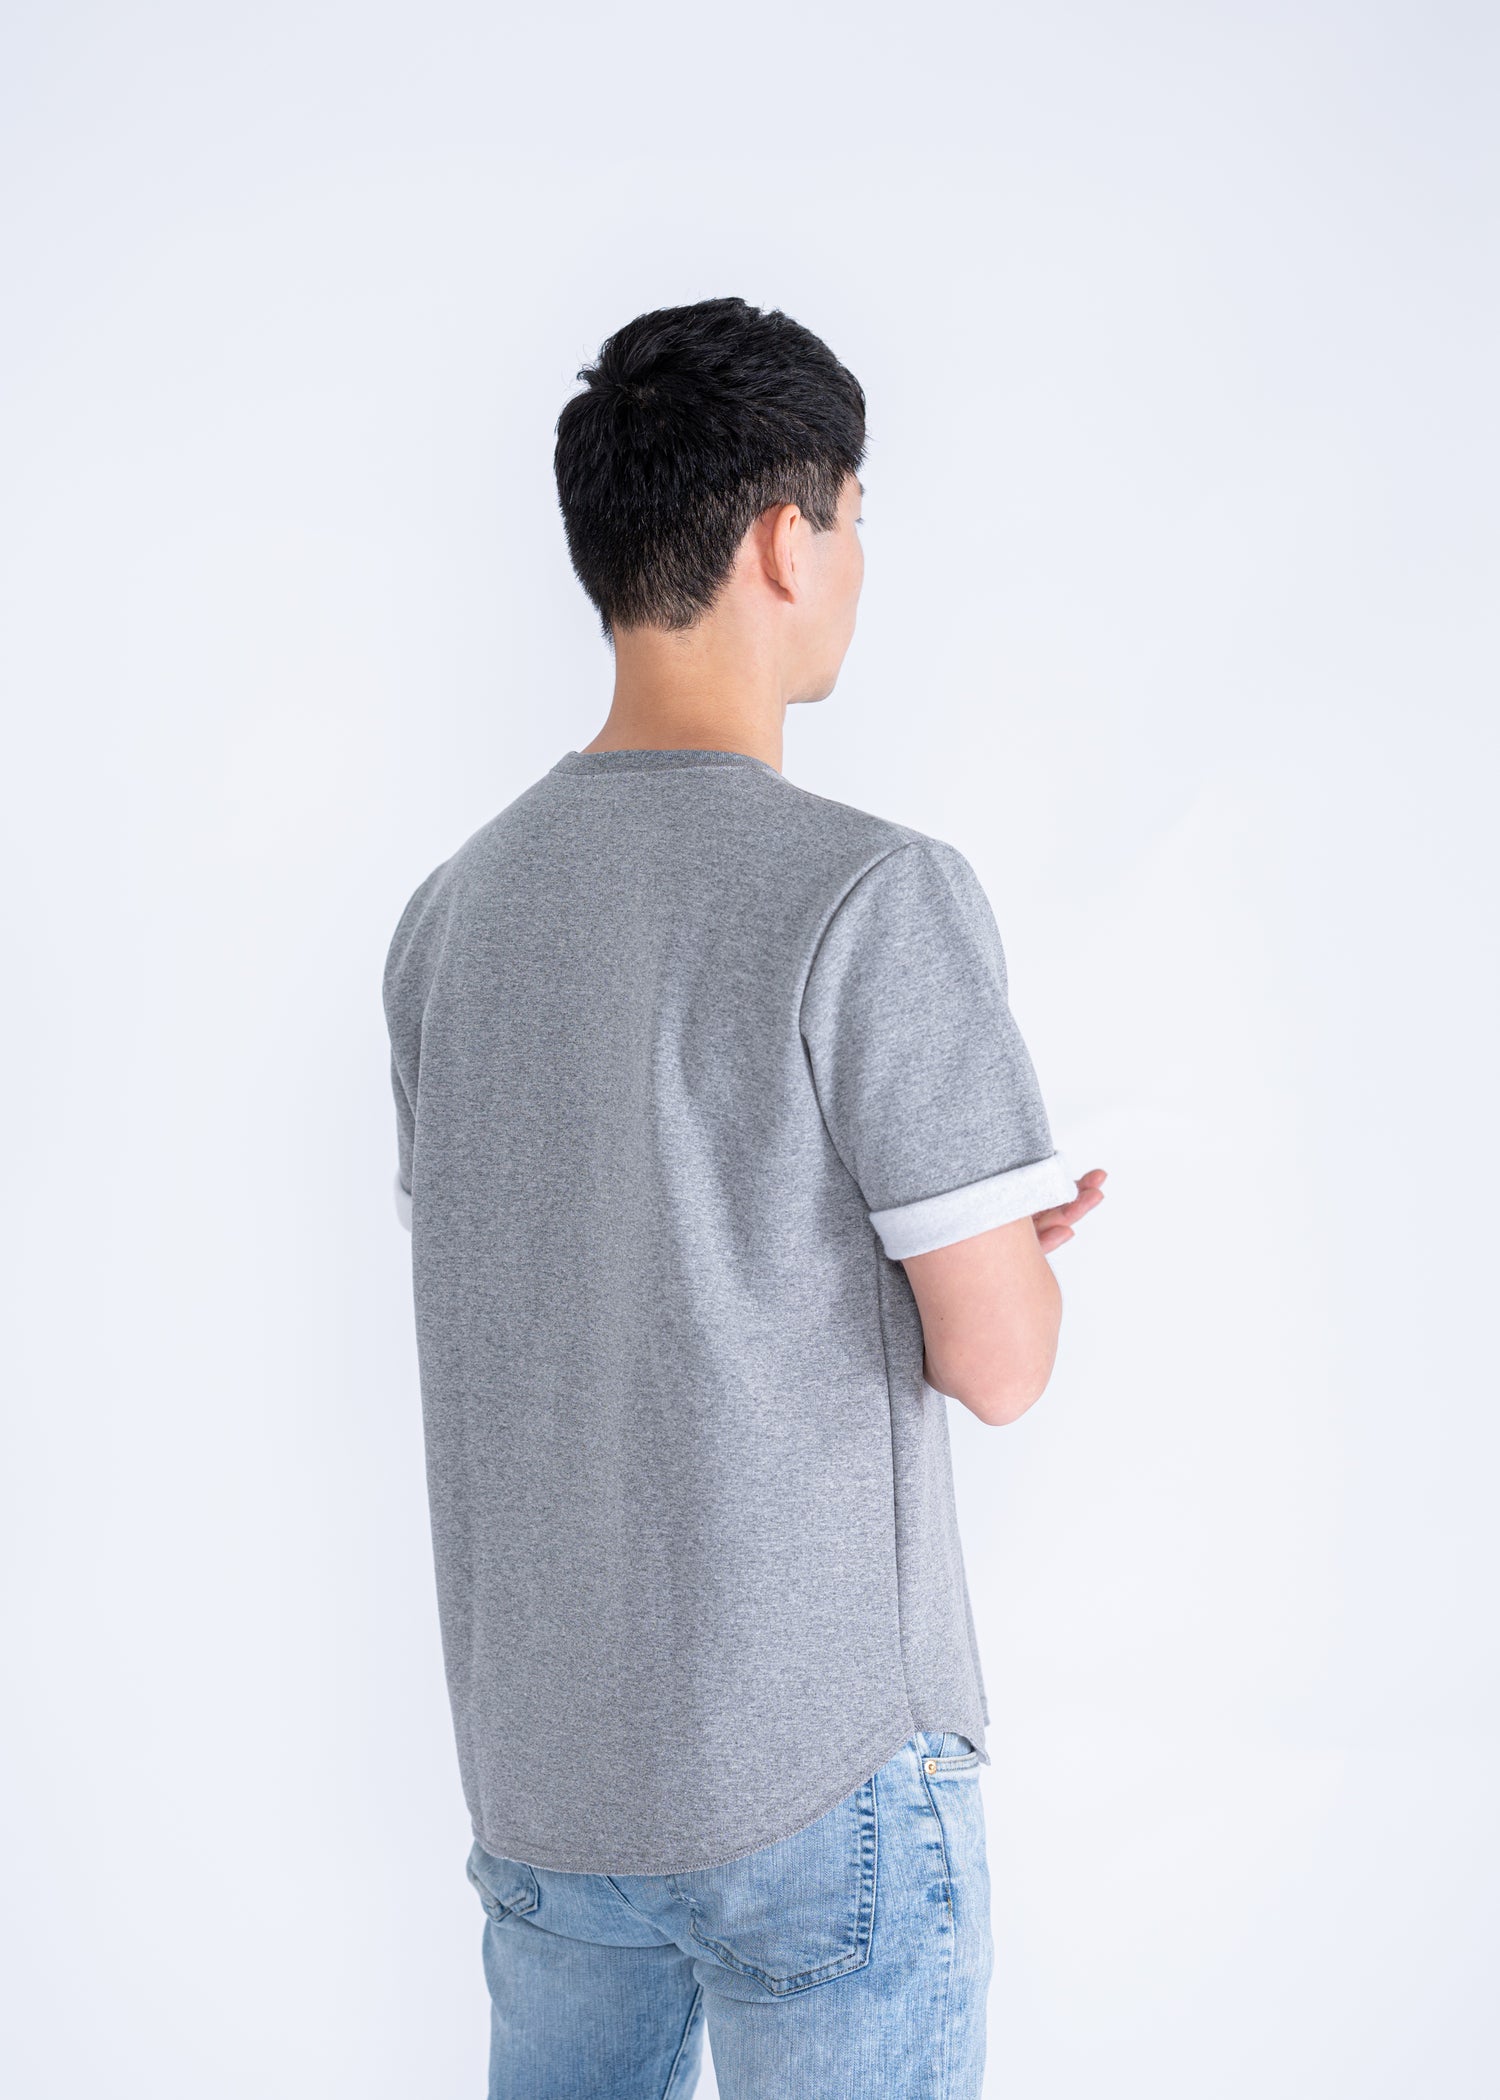 rfi s/s curved hem pullover - rfi apparel - short-sleeve sweater